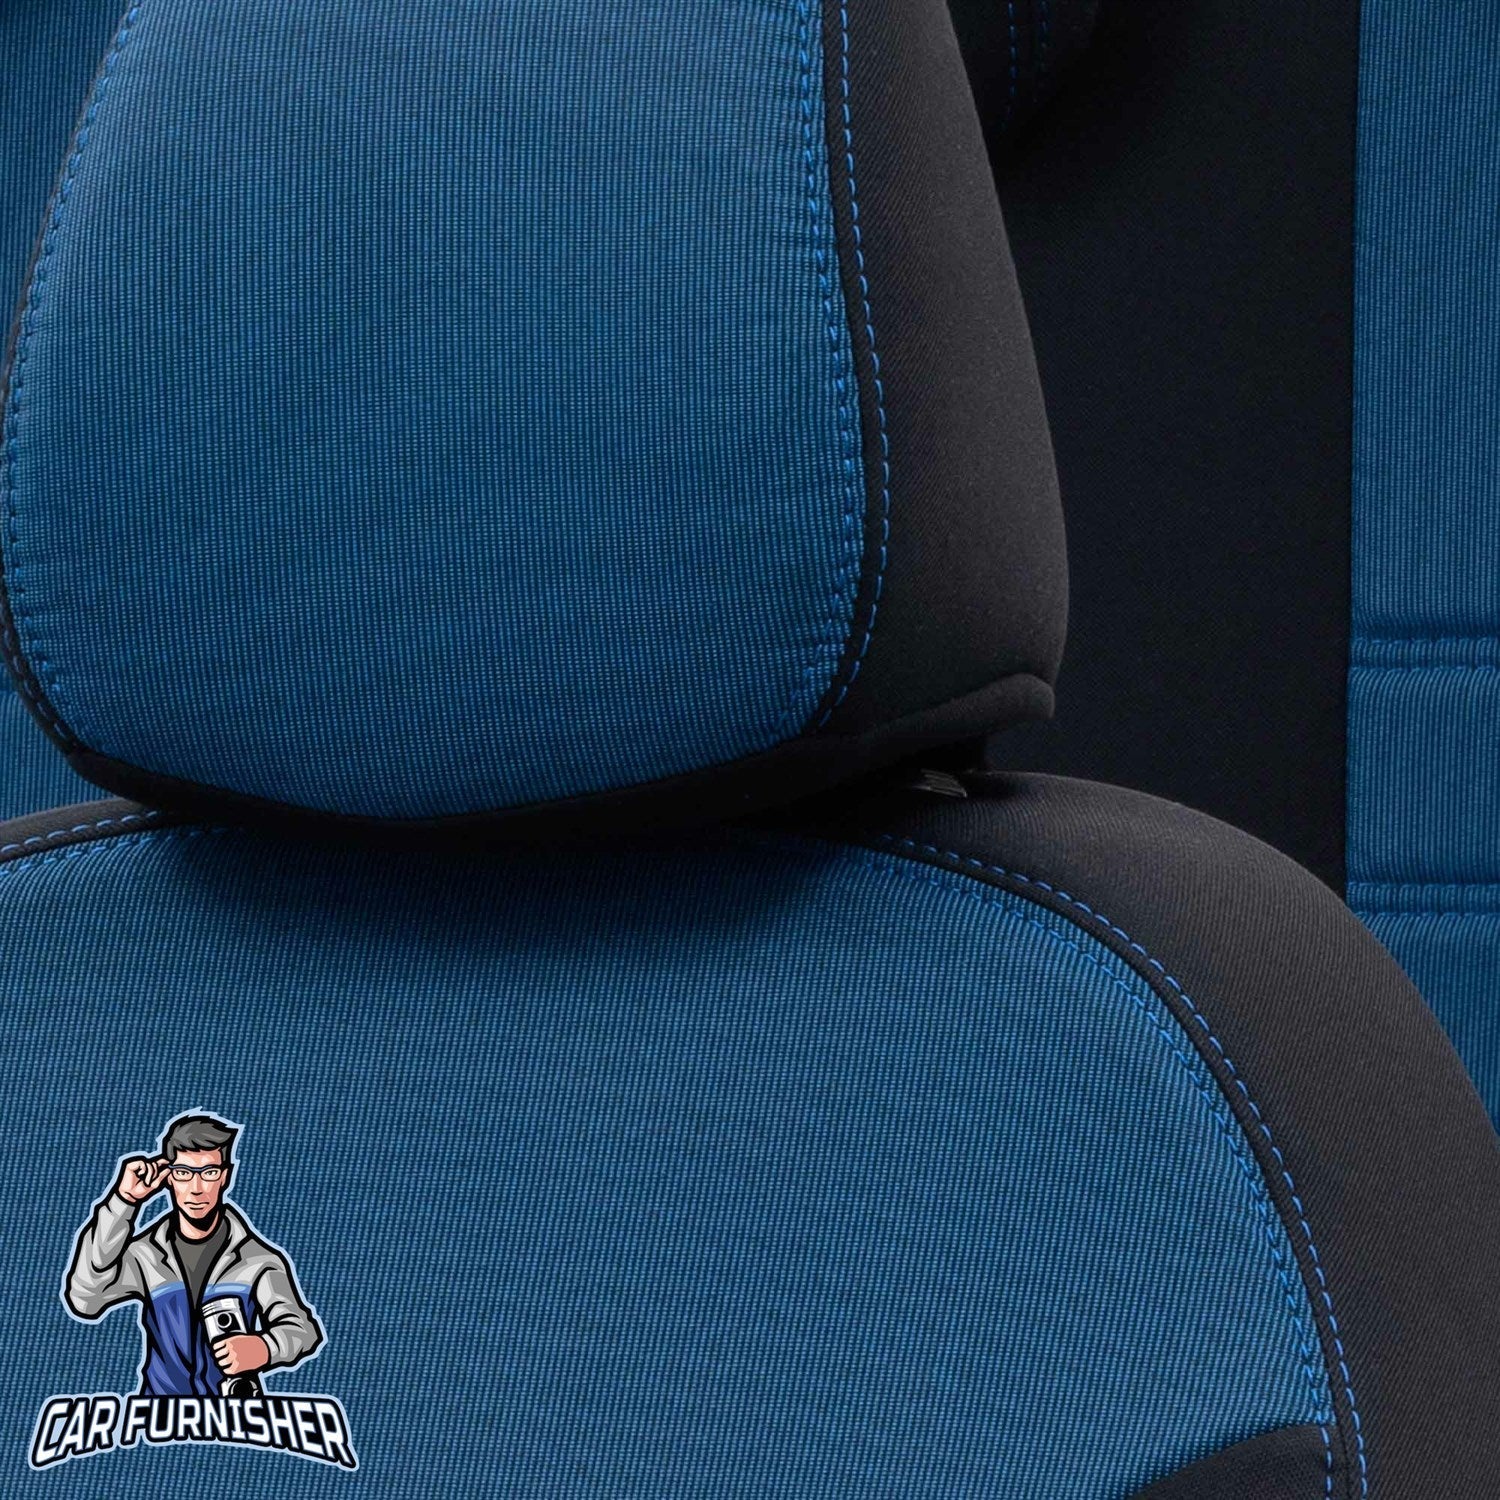 Isuzu Nkr Seat Covers Original Jacquard Design Blue Jacquard Fabric